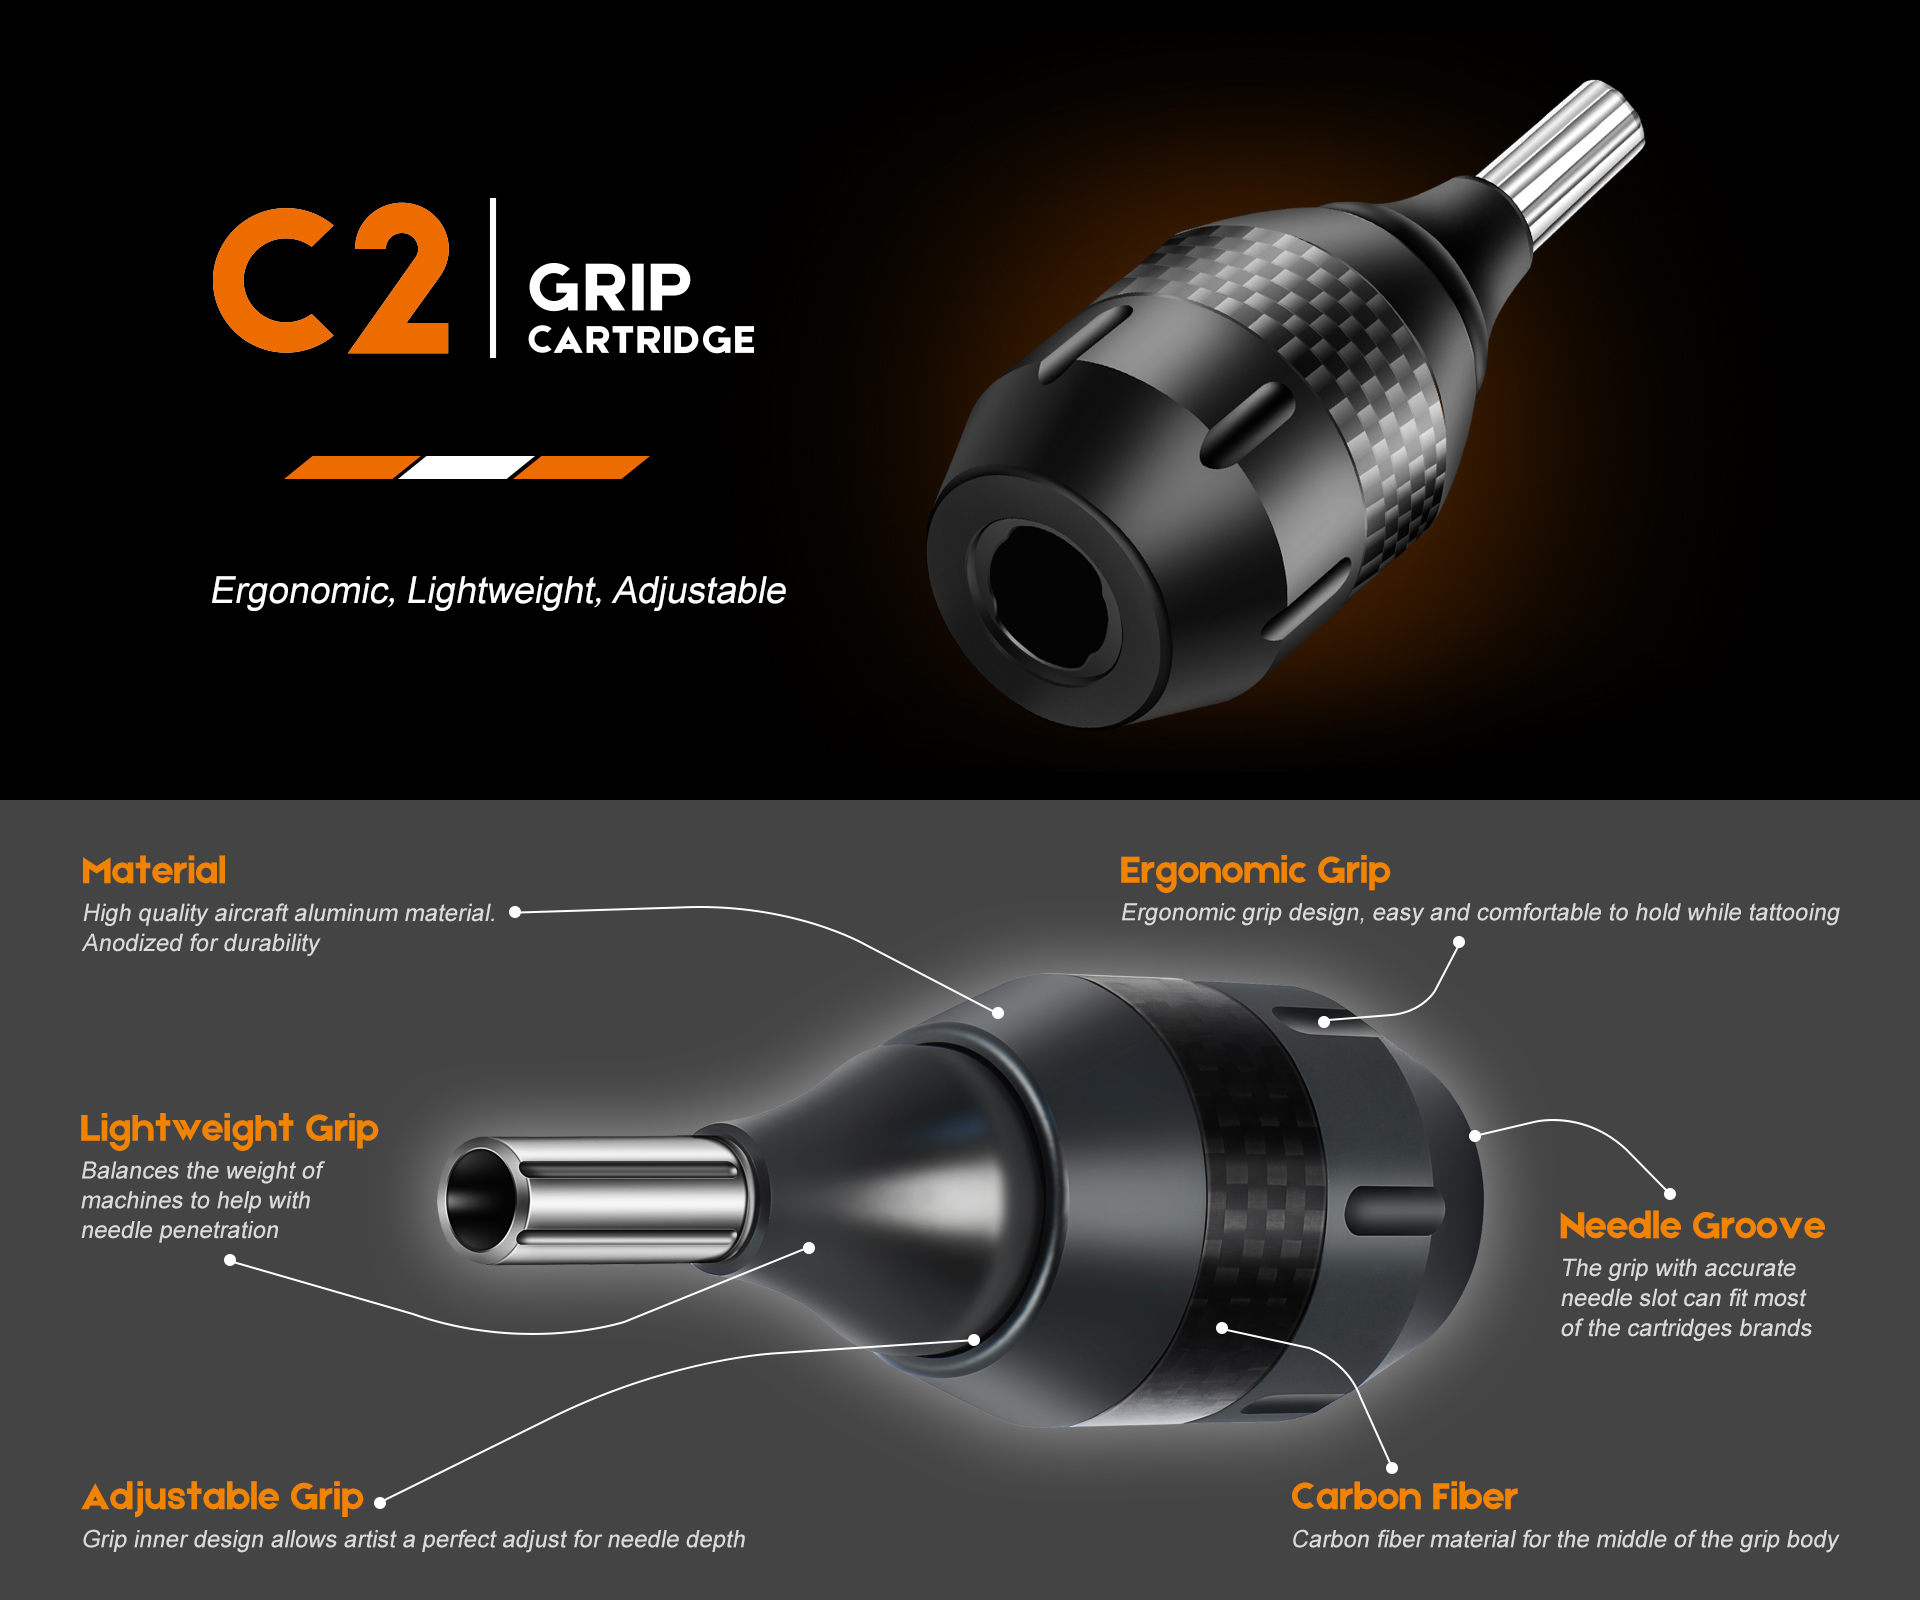 PEPAX C2 Cartridge Grip